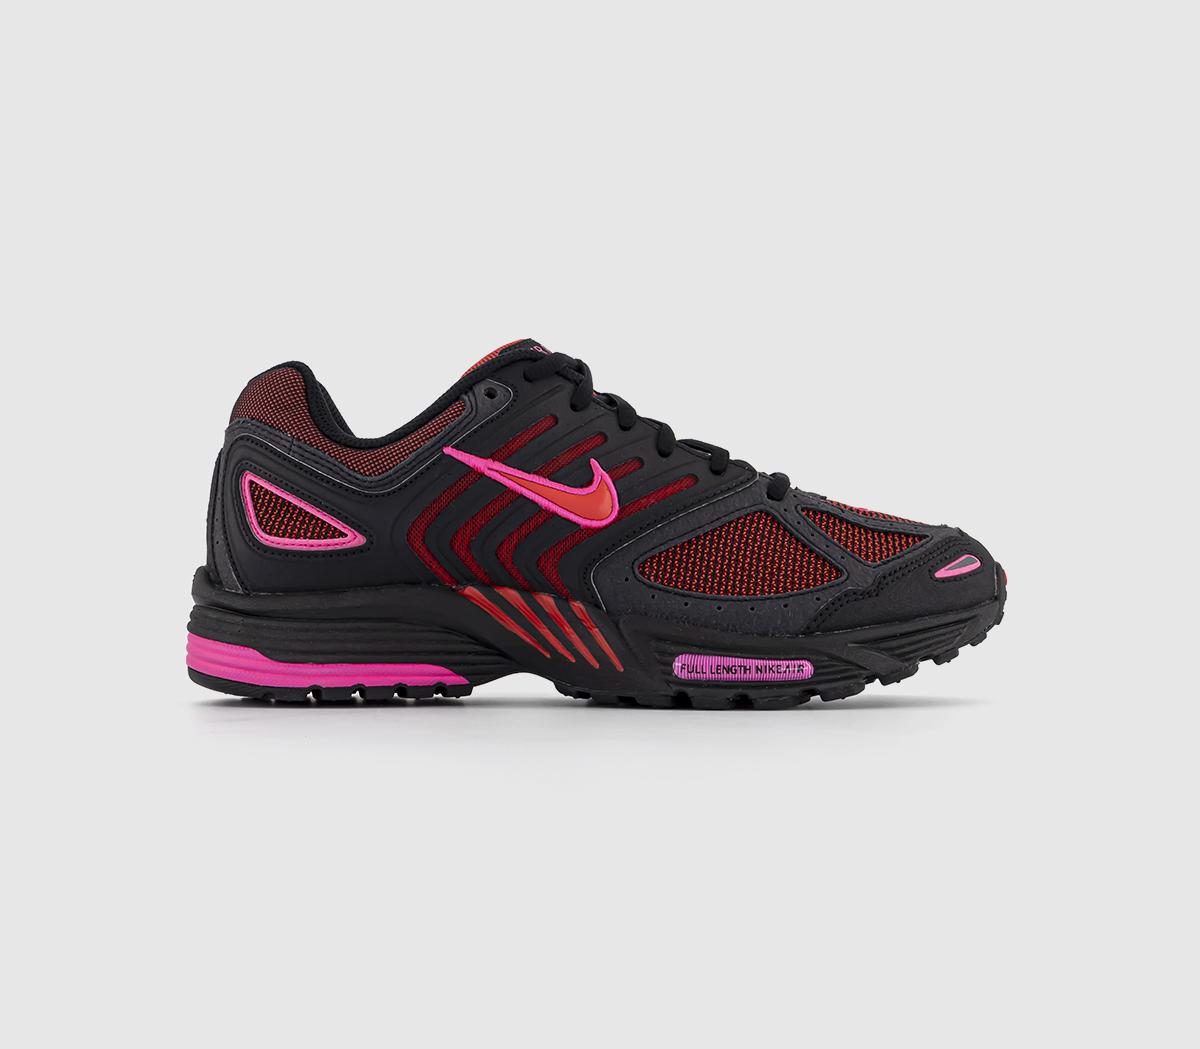 NikeAir Peg 2K5 Trainers Black Fire Red Fierce Pink Fierce Pink